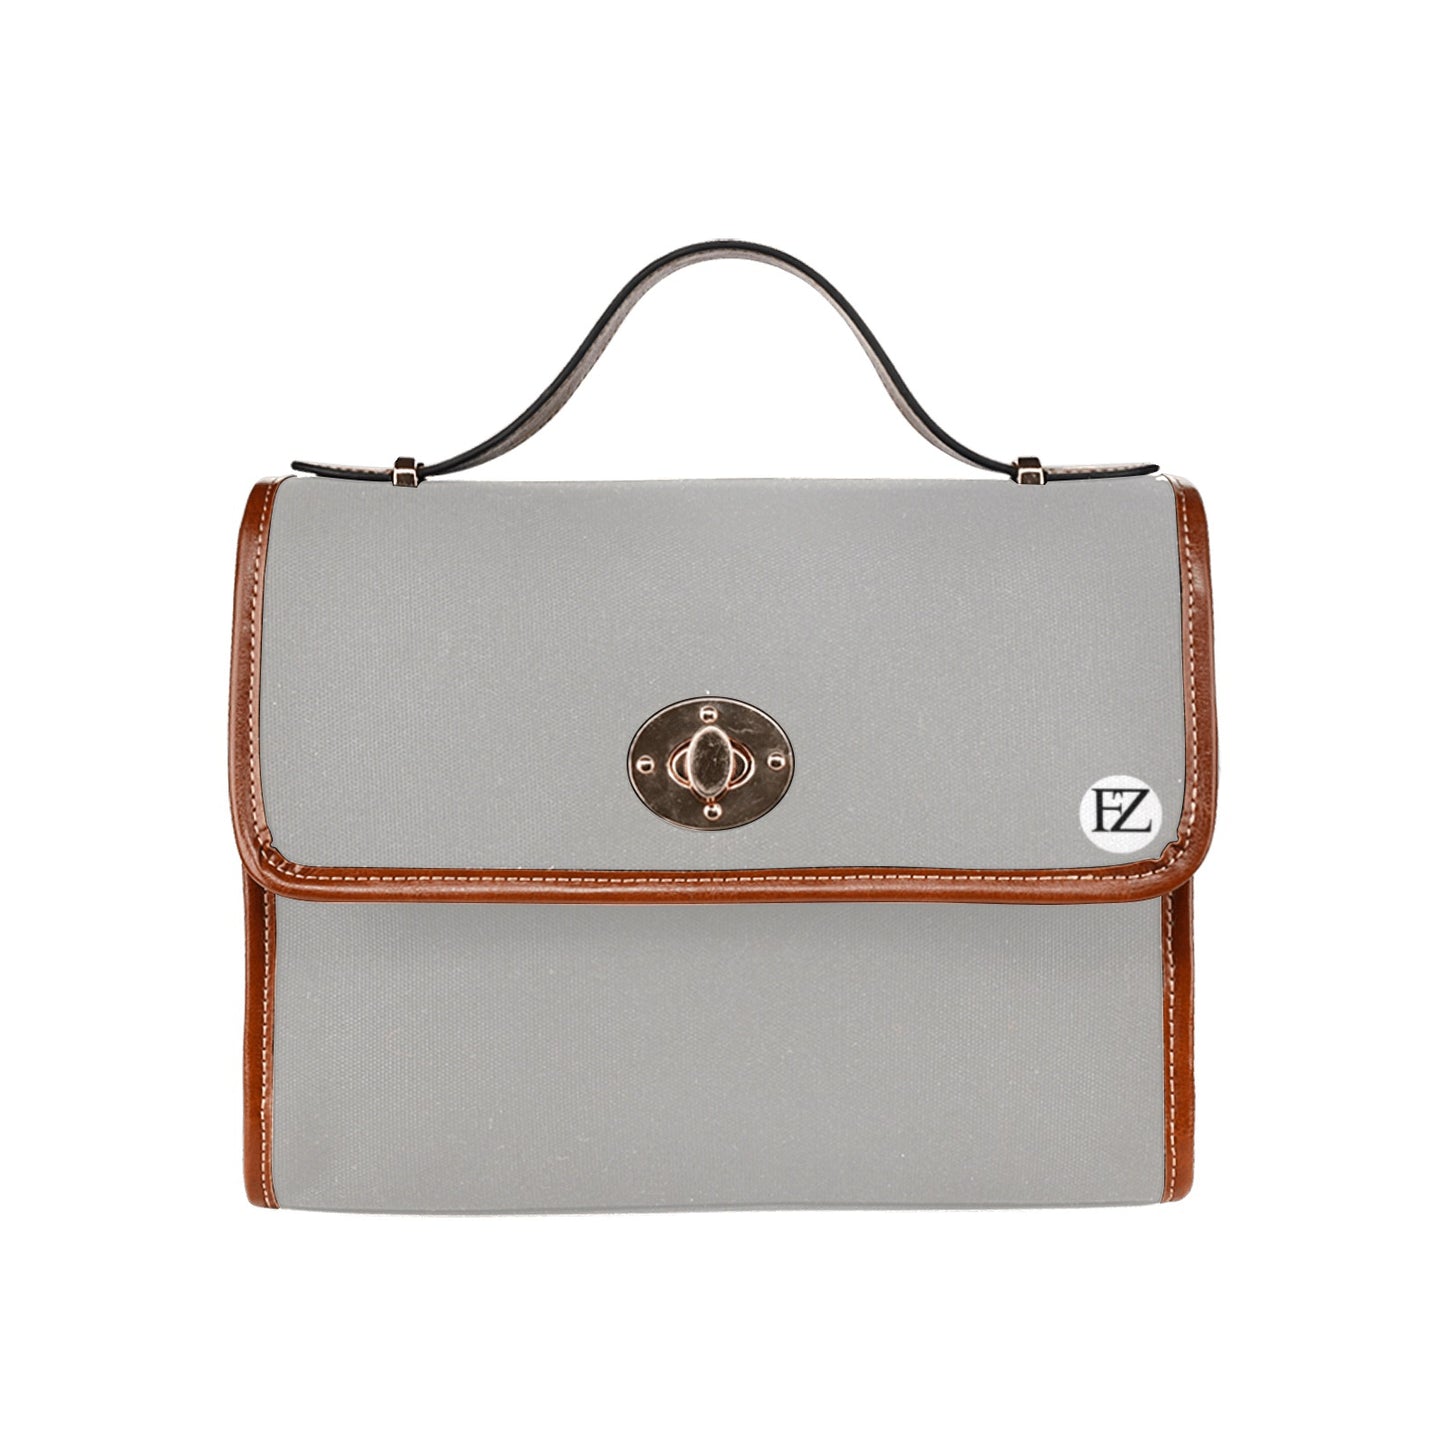 fz original handbag one size / fz - grey all over print waterproof canvas bag(model1641)(brown strap)